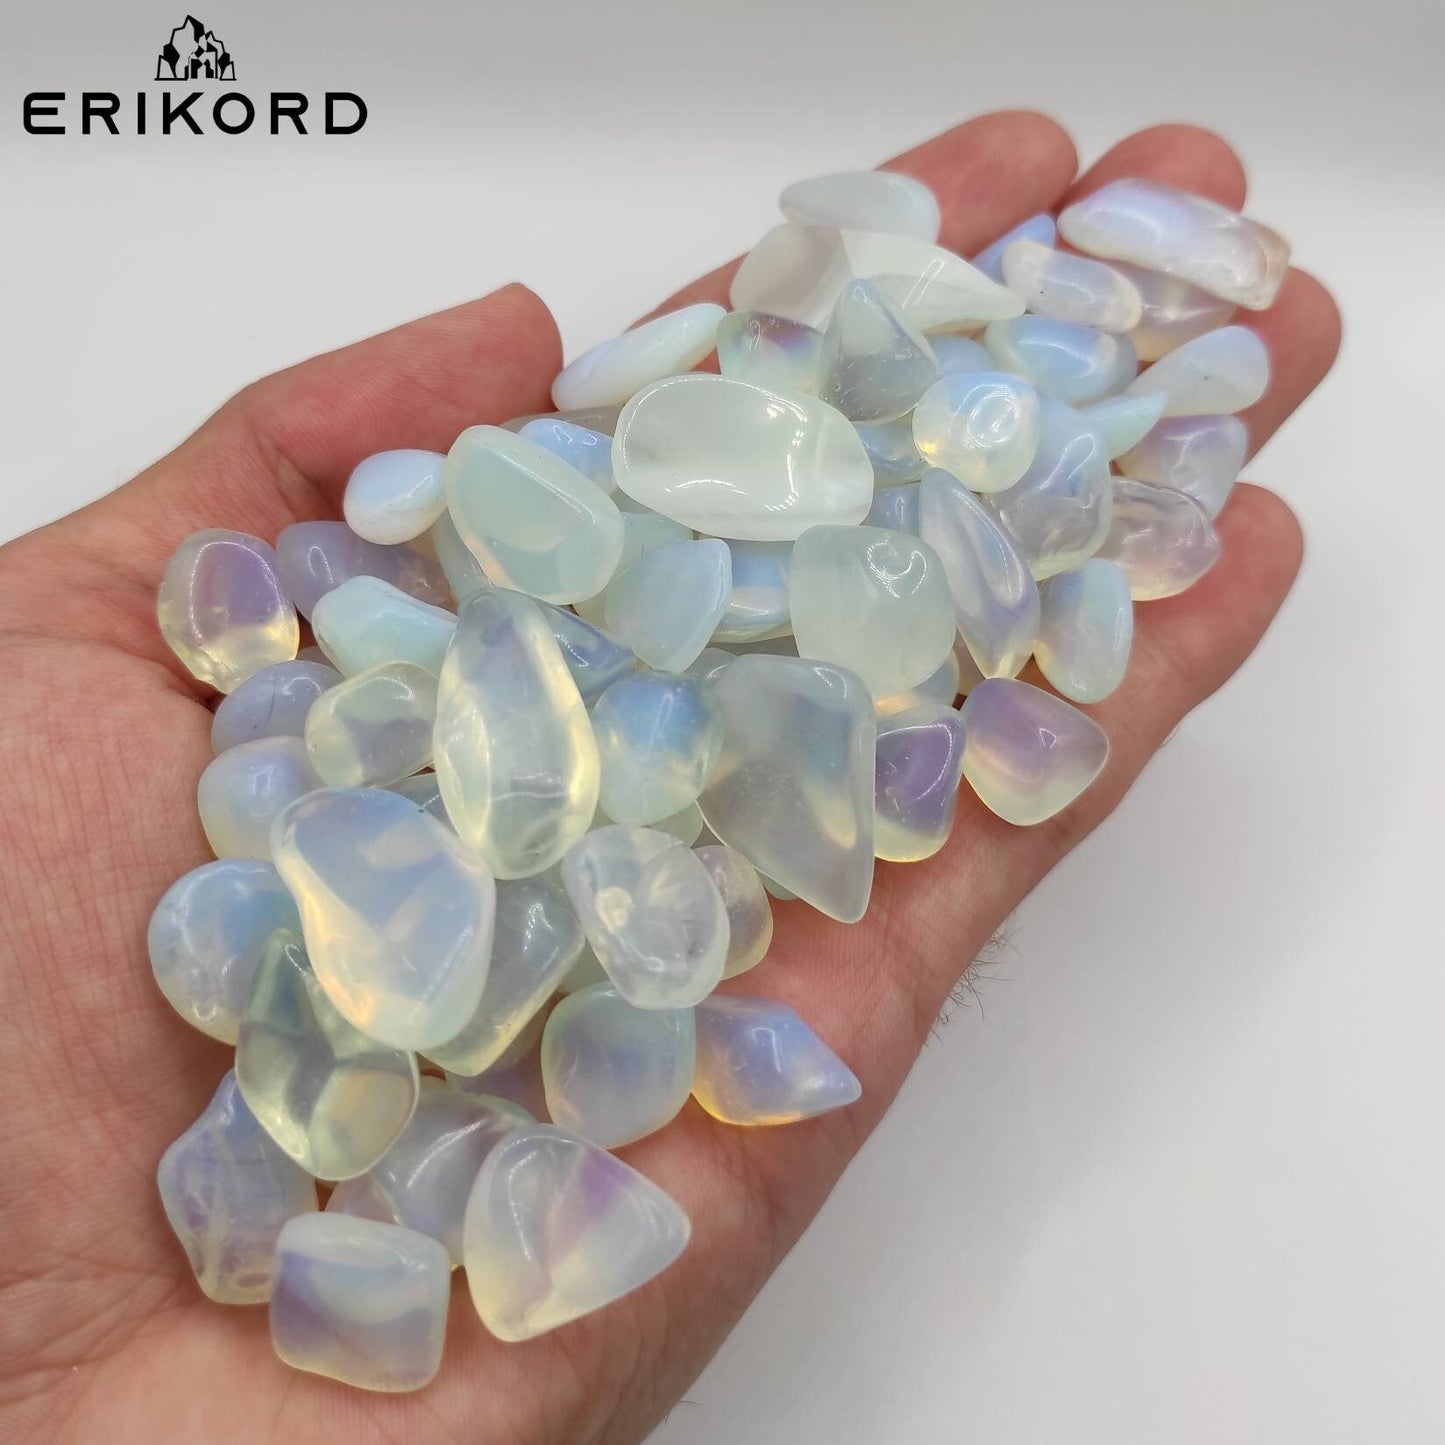 50/100/200g Opalite Gravel Synthetic Opal 8-20mm Tumbled Gravel Polished Gravel Imitation Opal Moonstone Polished Gems White Crystals